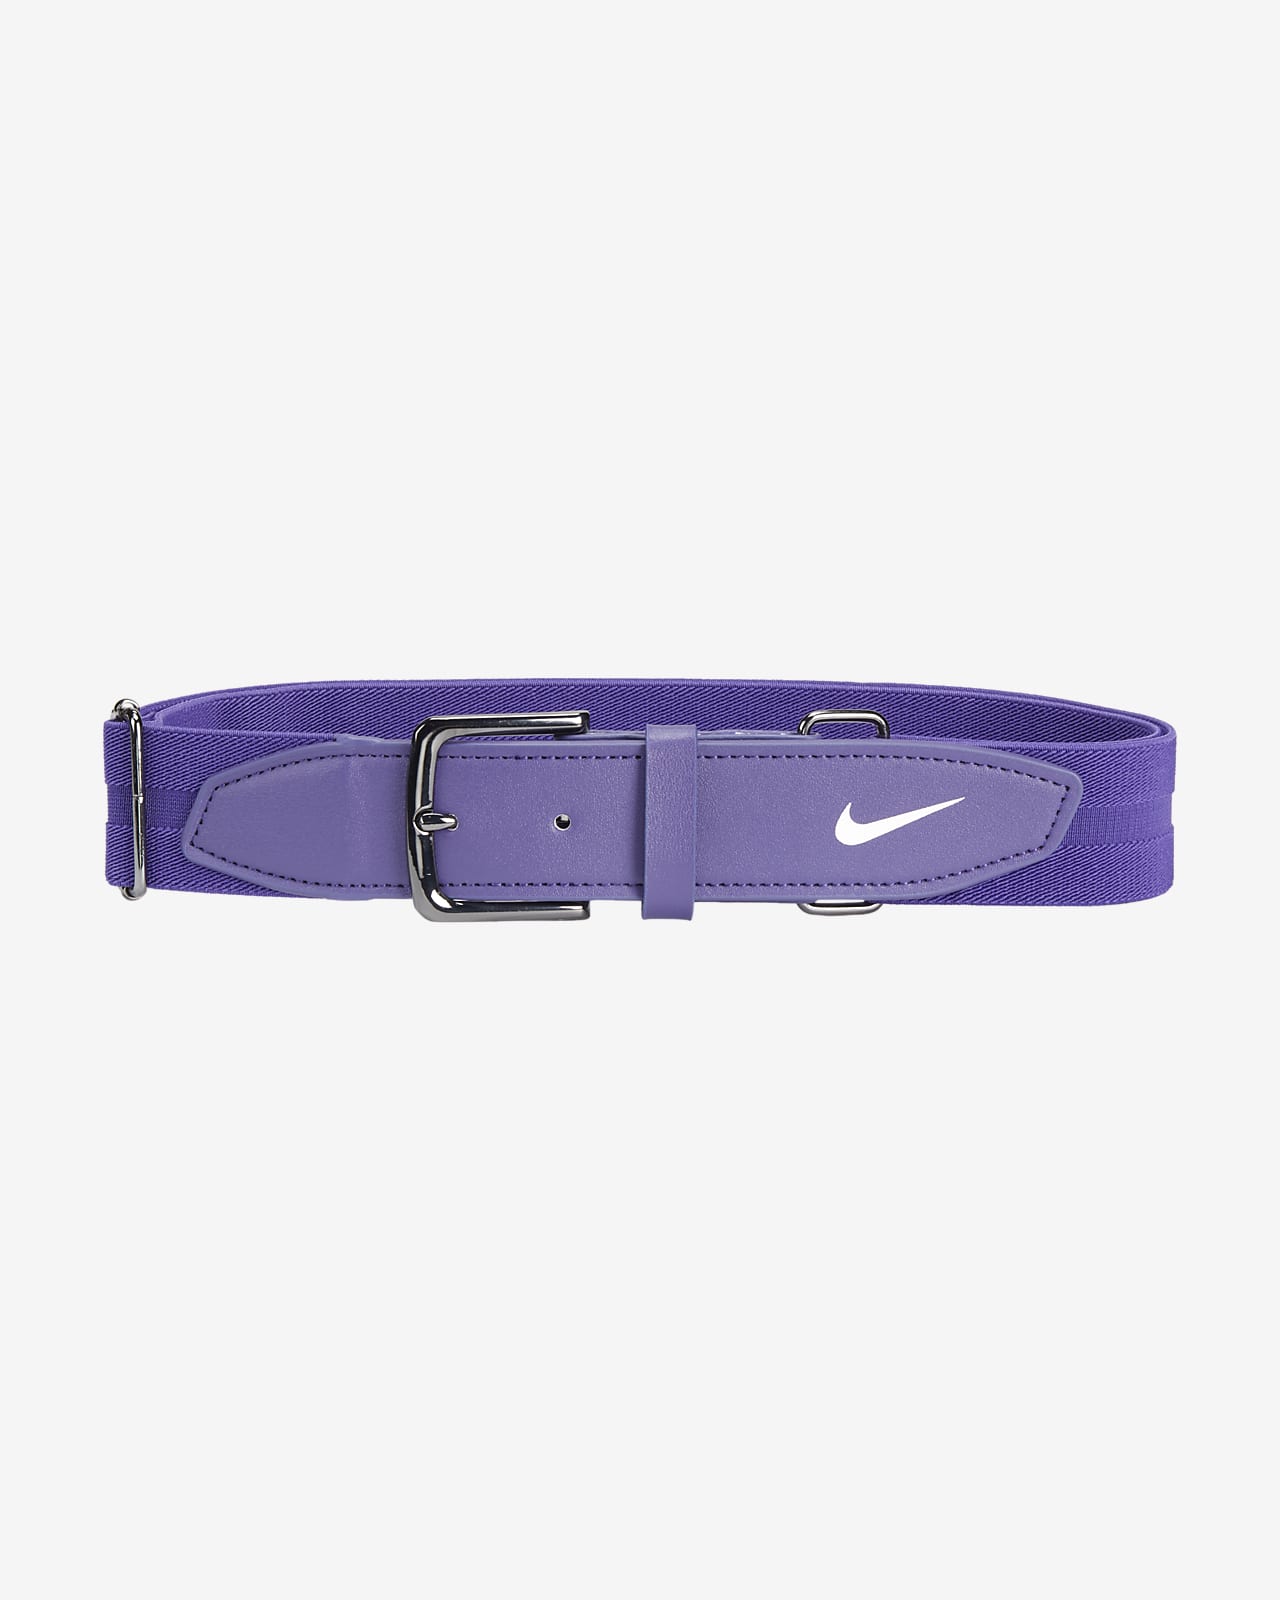 Cinturón de béisbol Nike